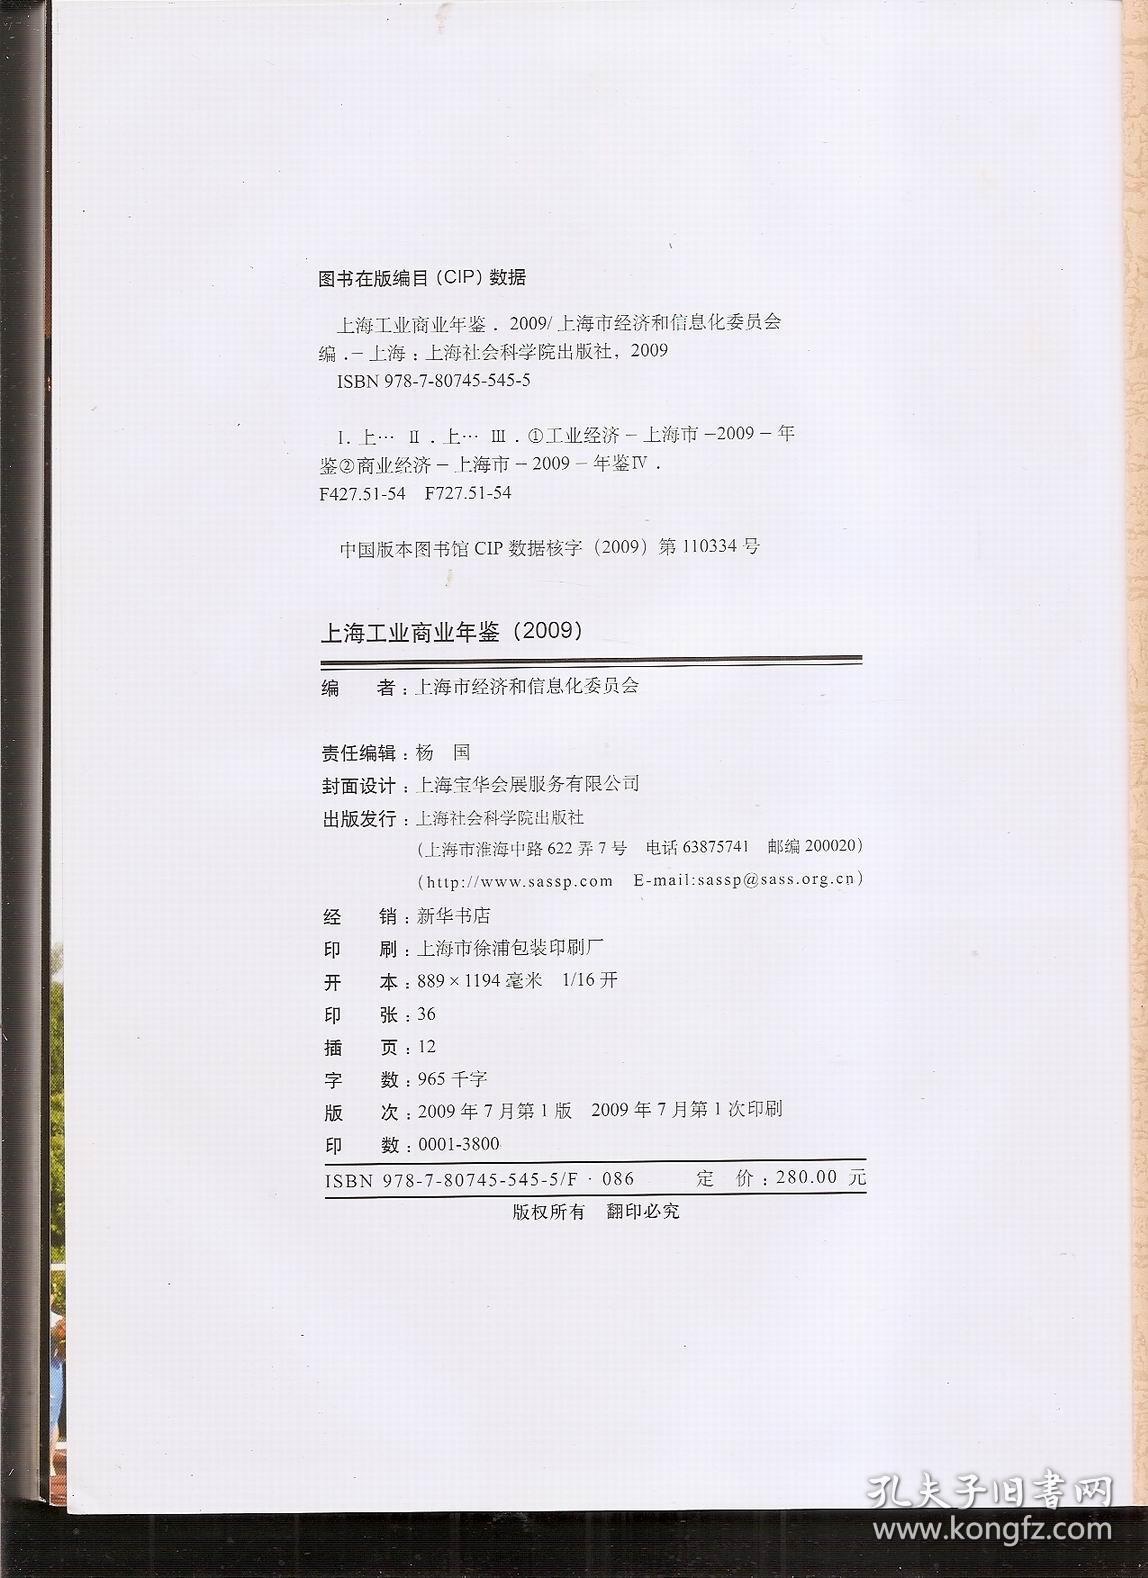 上海工业商业年鉴.2009.硬精装shanghai industrial&business yearbook